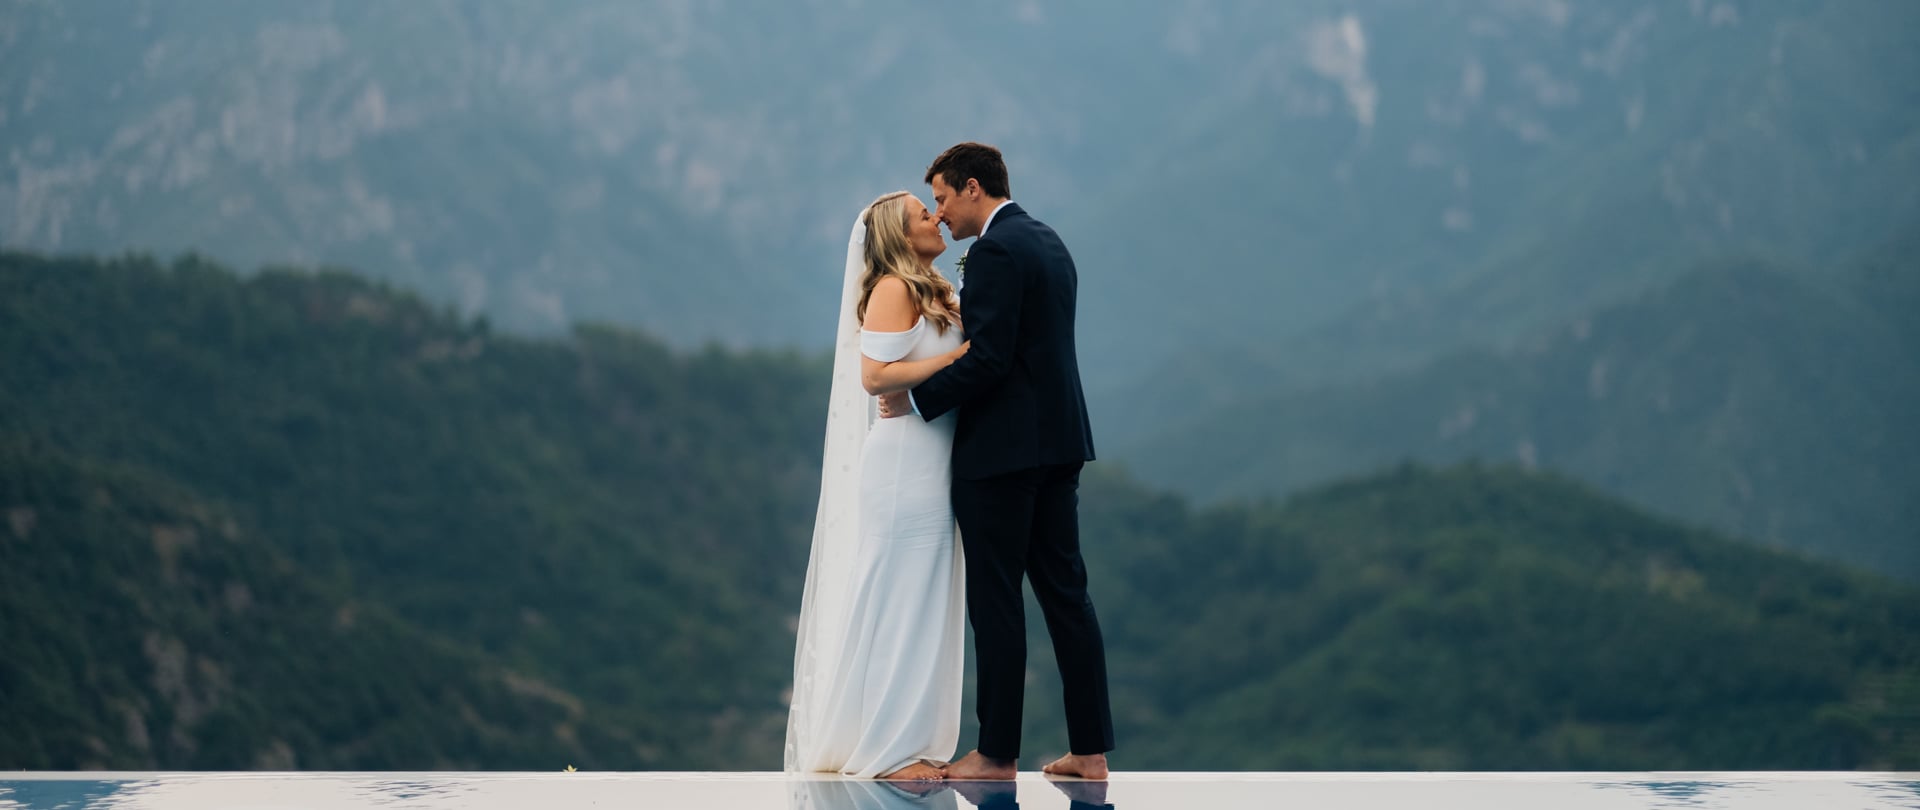 Kate & Barry Wedding Video Filmed at Amalfi coast, Europe